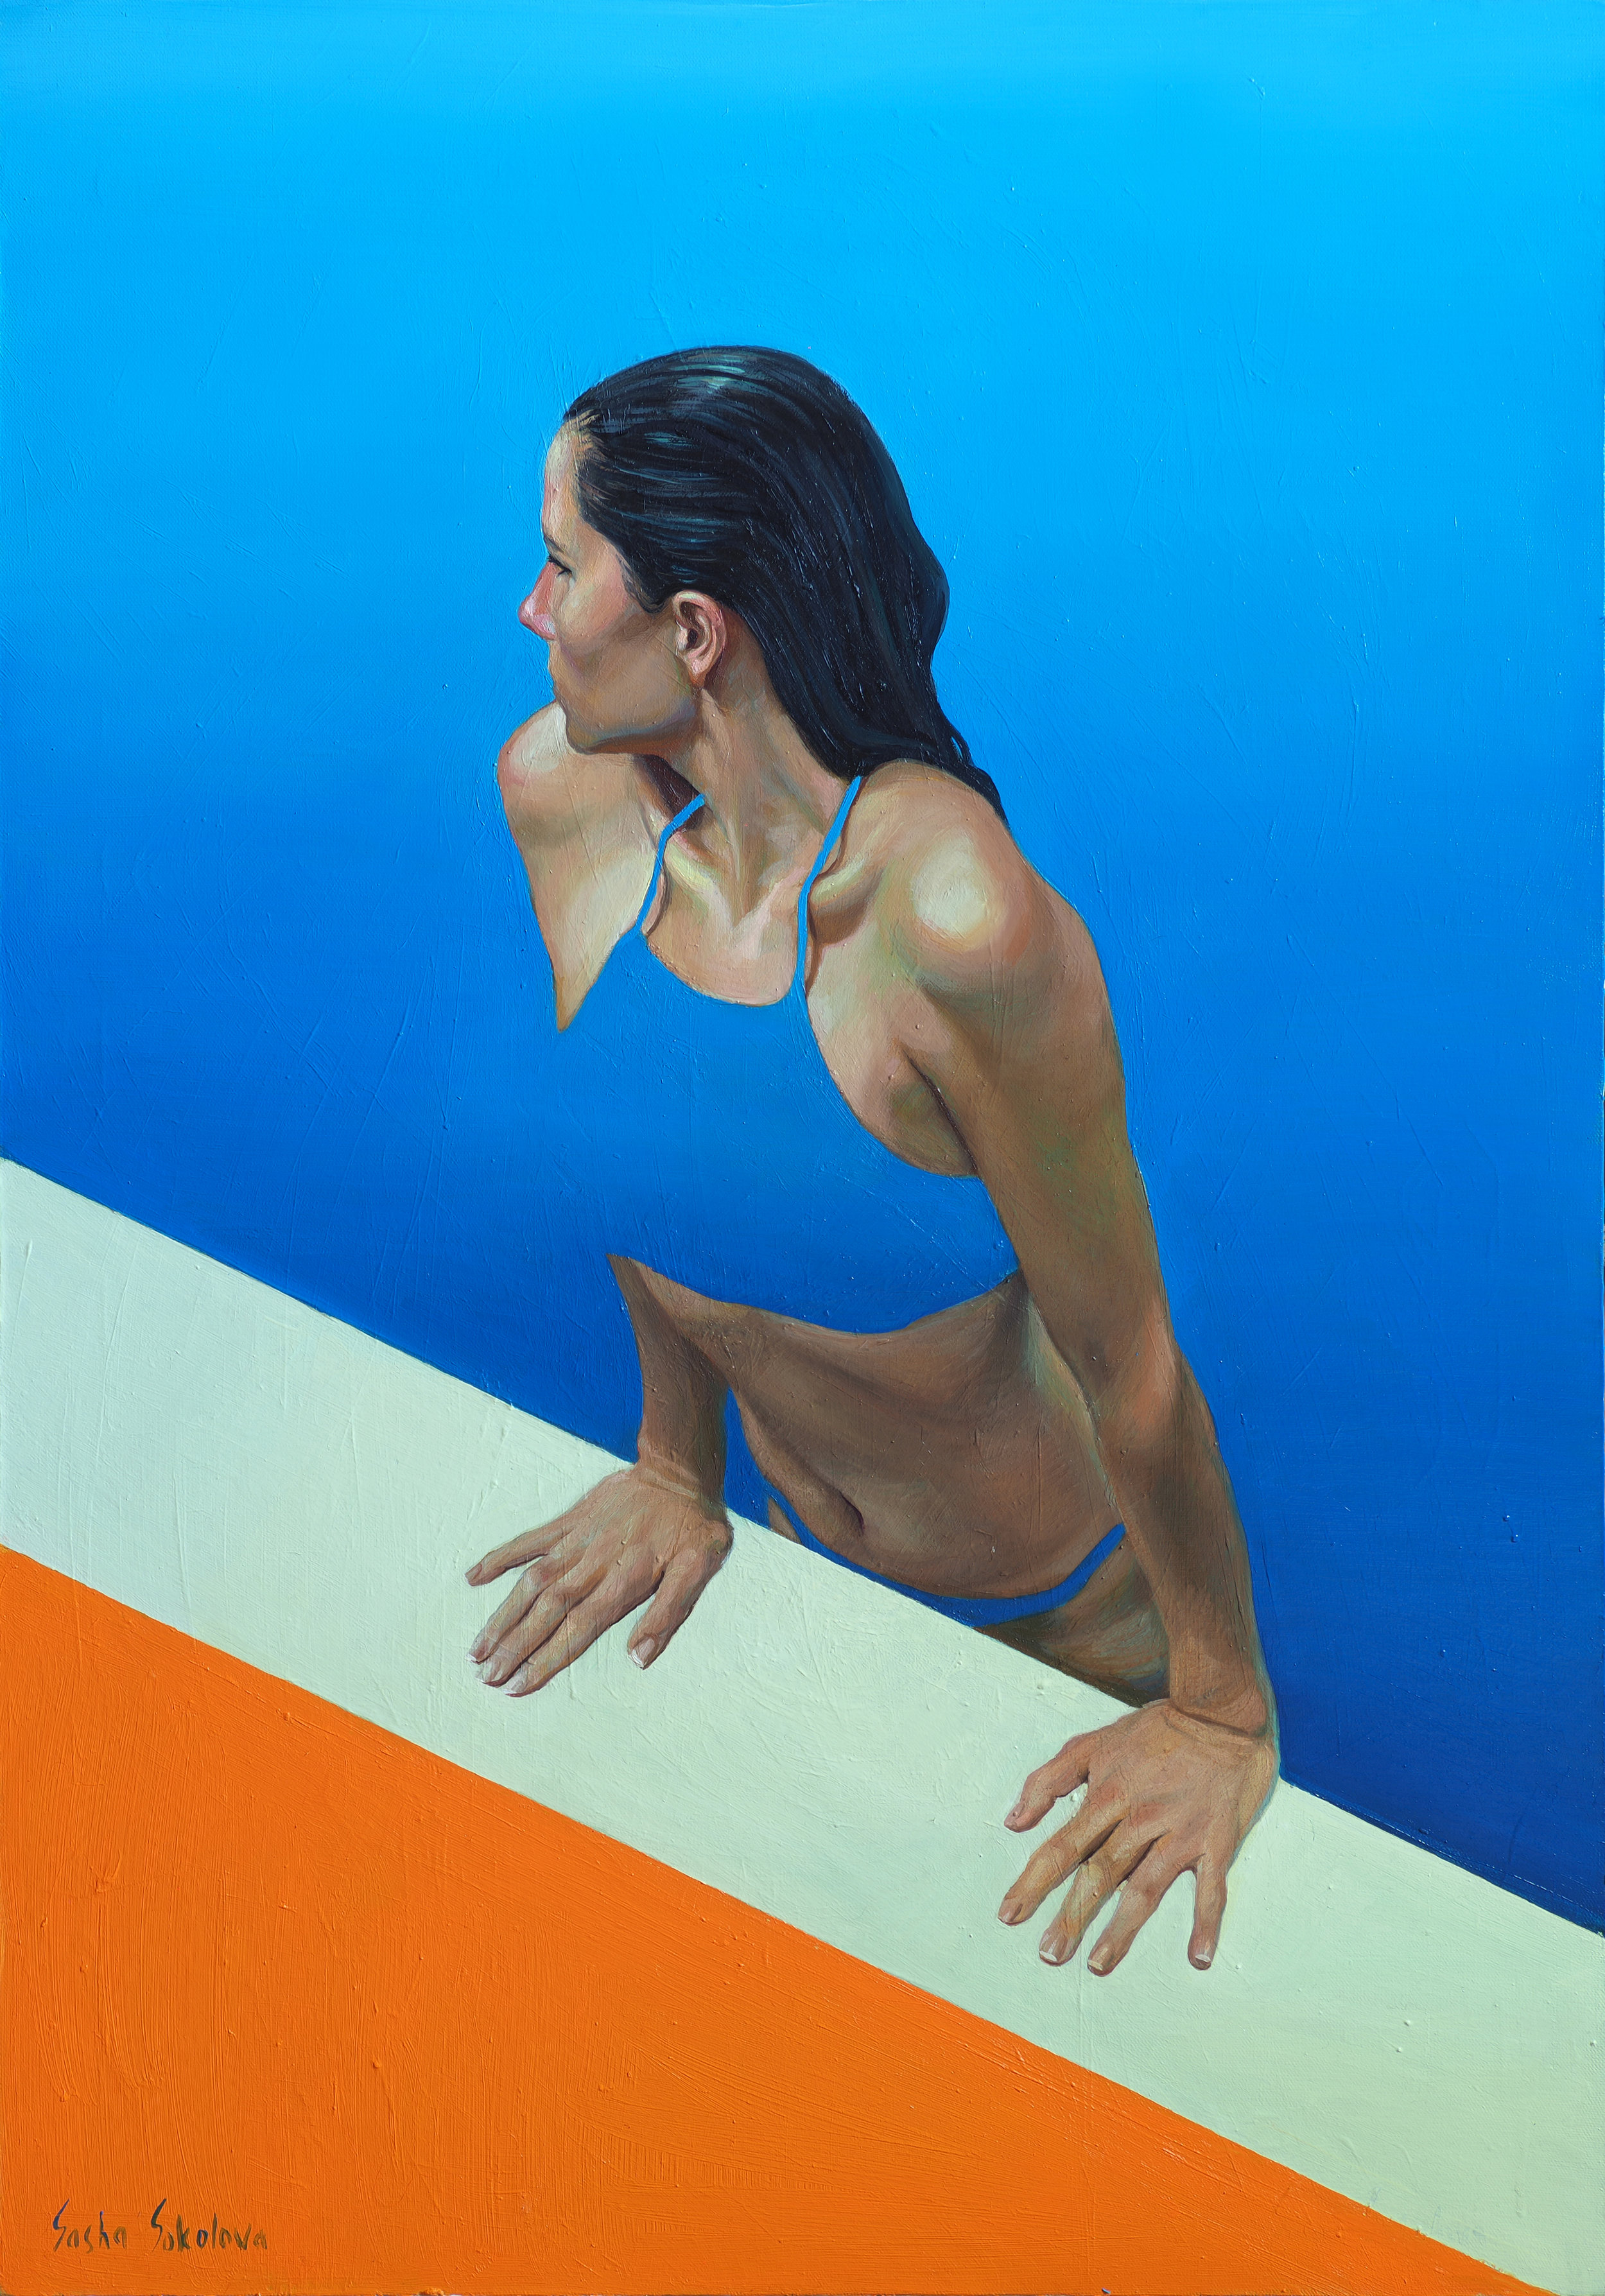 Splash 12 - 1, Sasha Sokolova, Buy the painting Oil